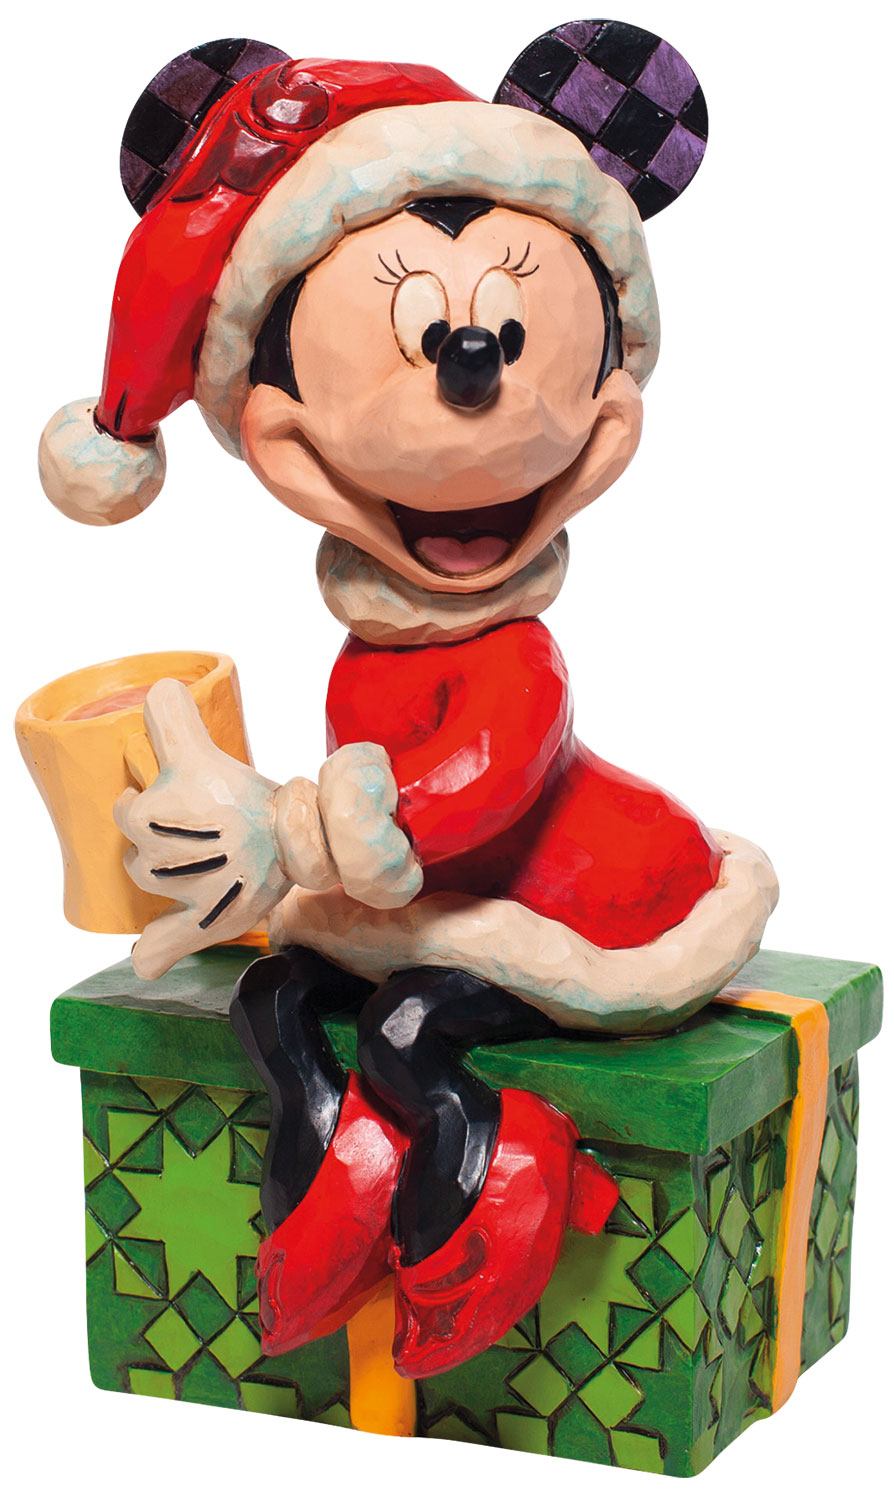 Skulptur "Minnie Mouse mit heißer Schokolade", Kunstguss